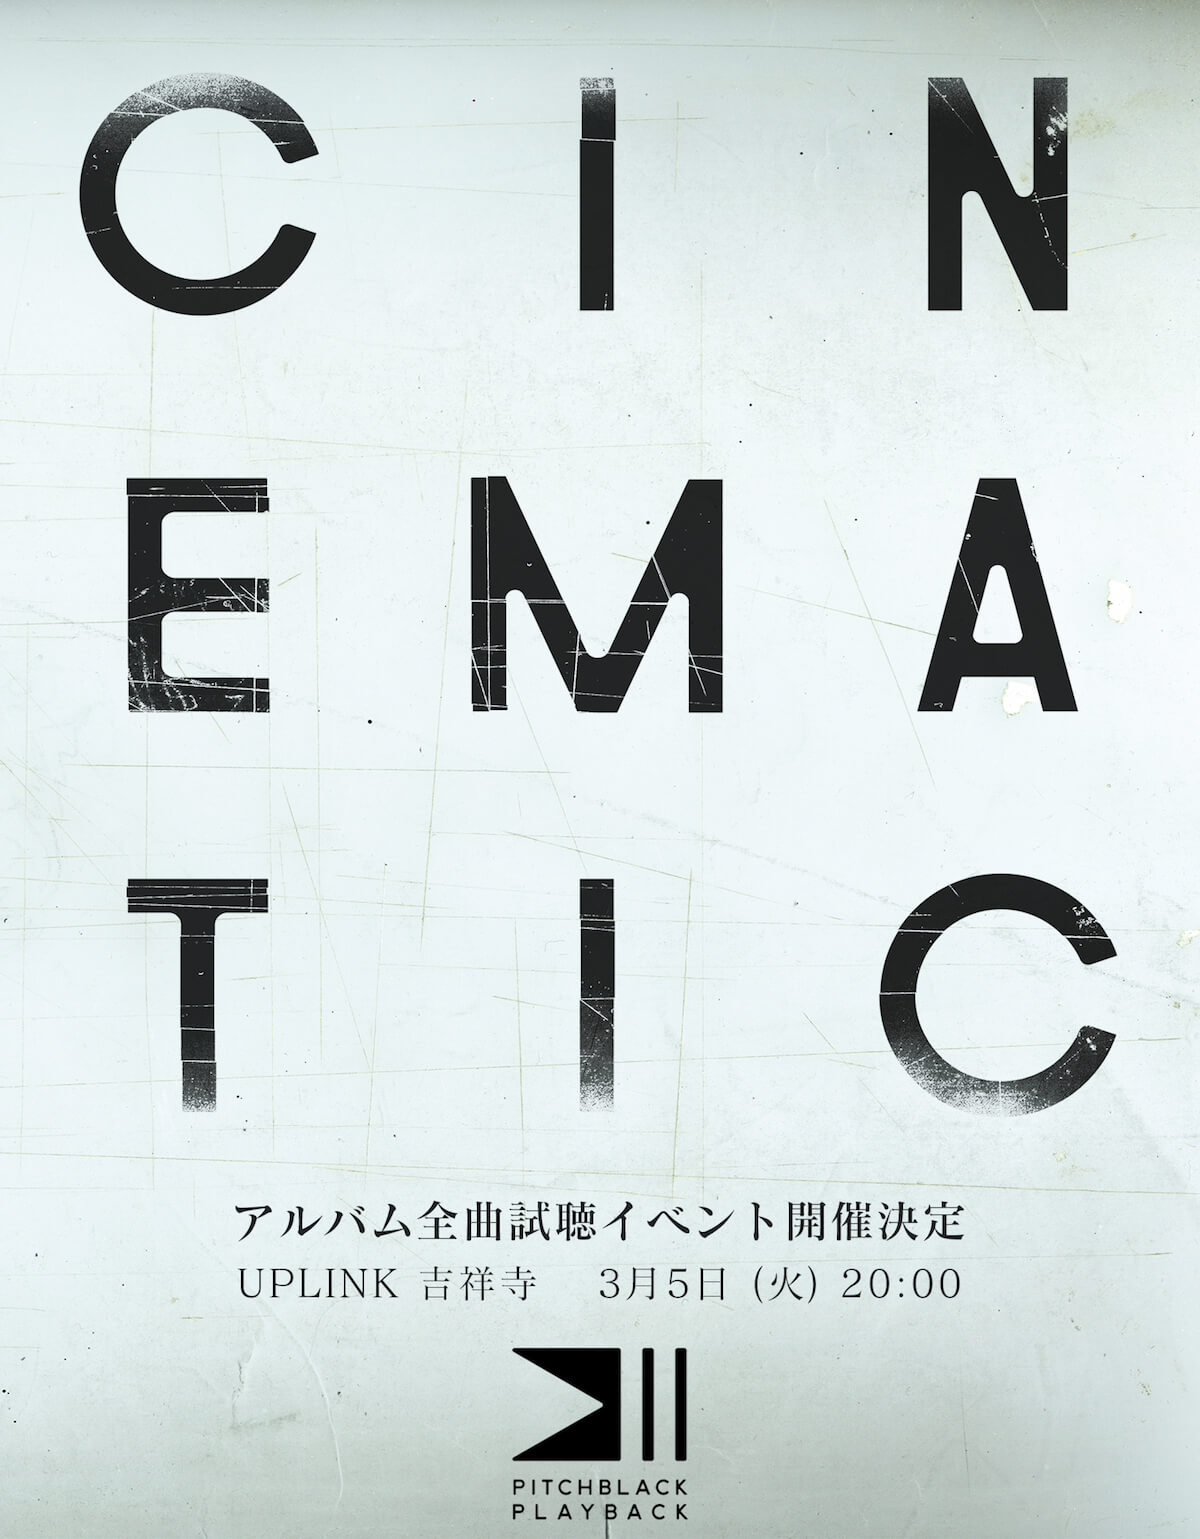 The Cinematic Orchestraの新作試写会「Pitchblack Playback」が3月に開催｜新曲のエディットも公開 music190214-cinematicorchestra-2